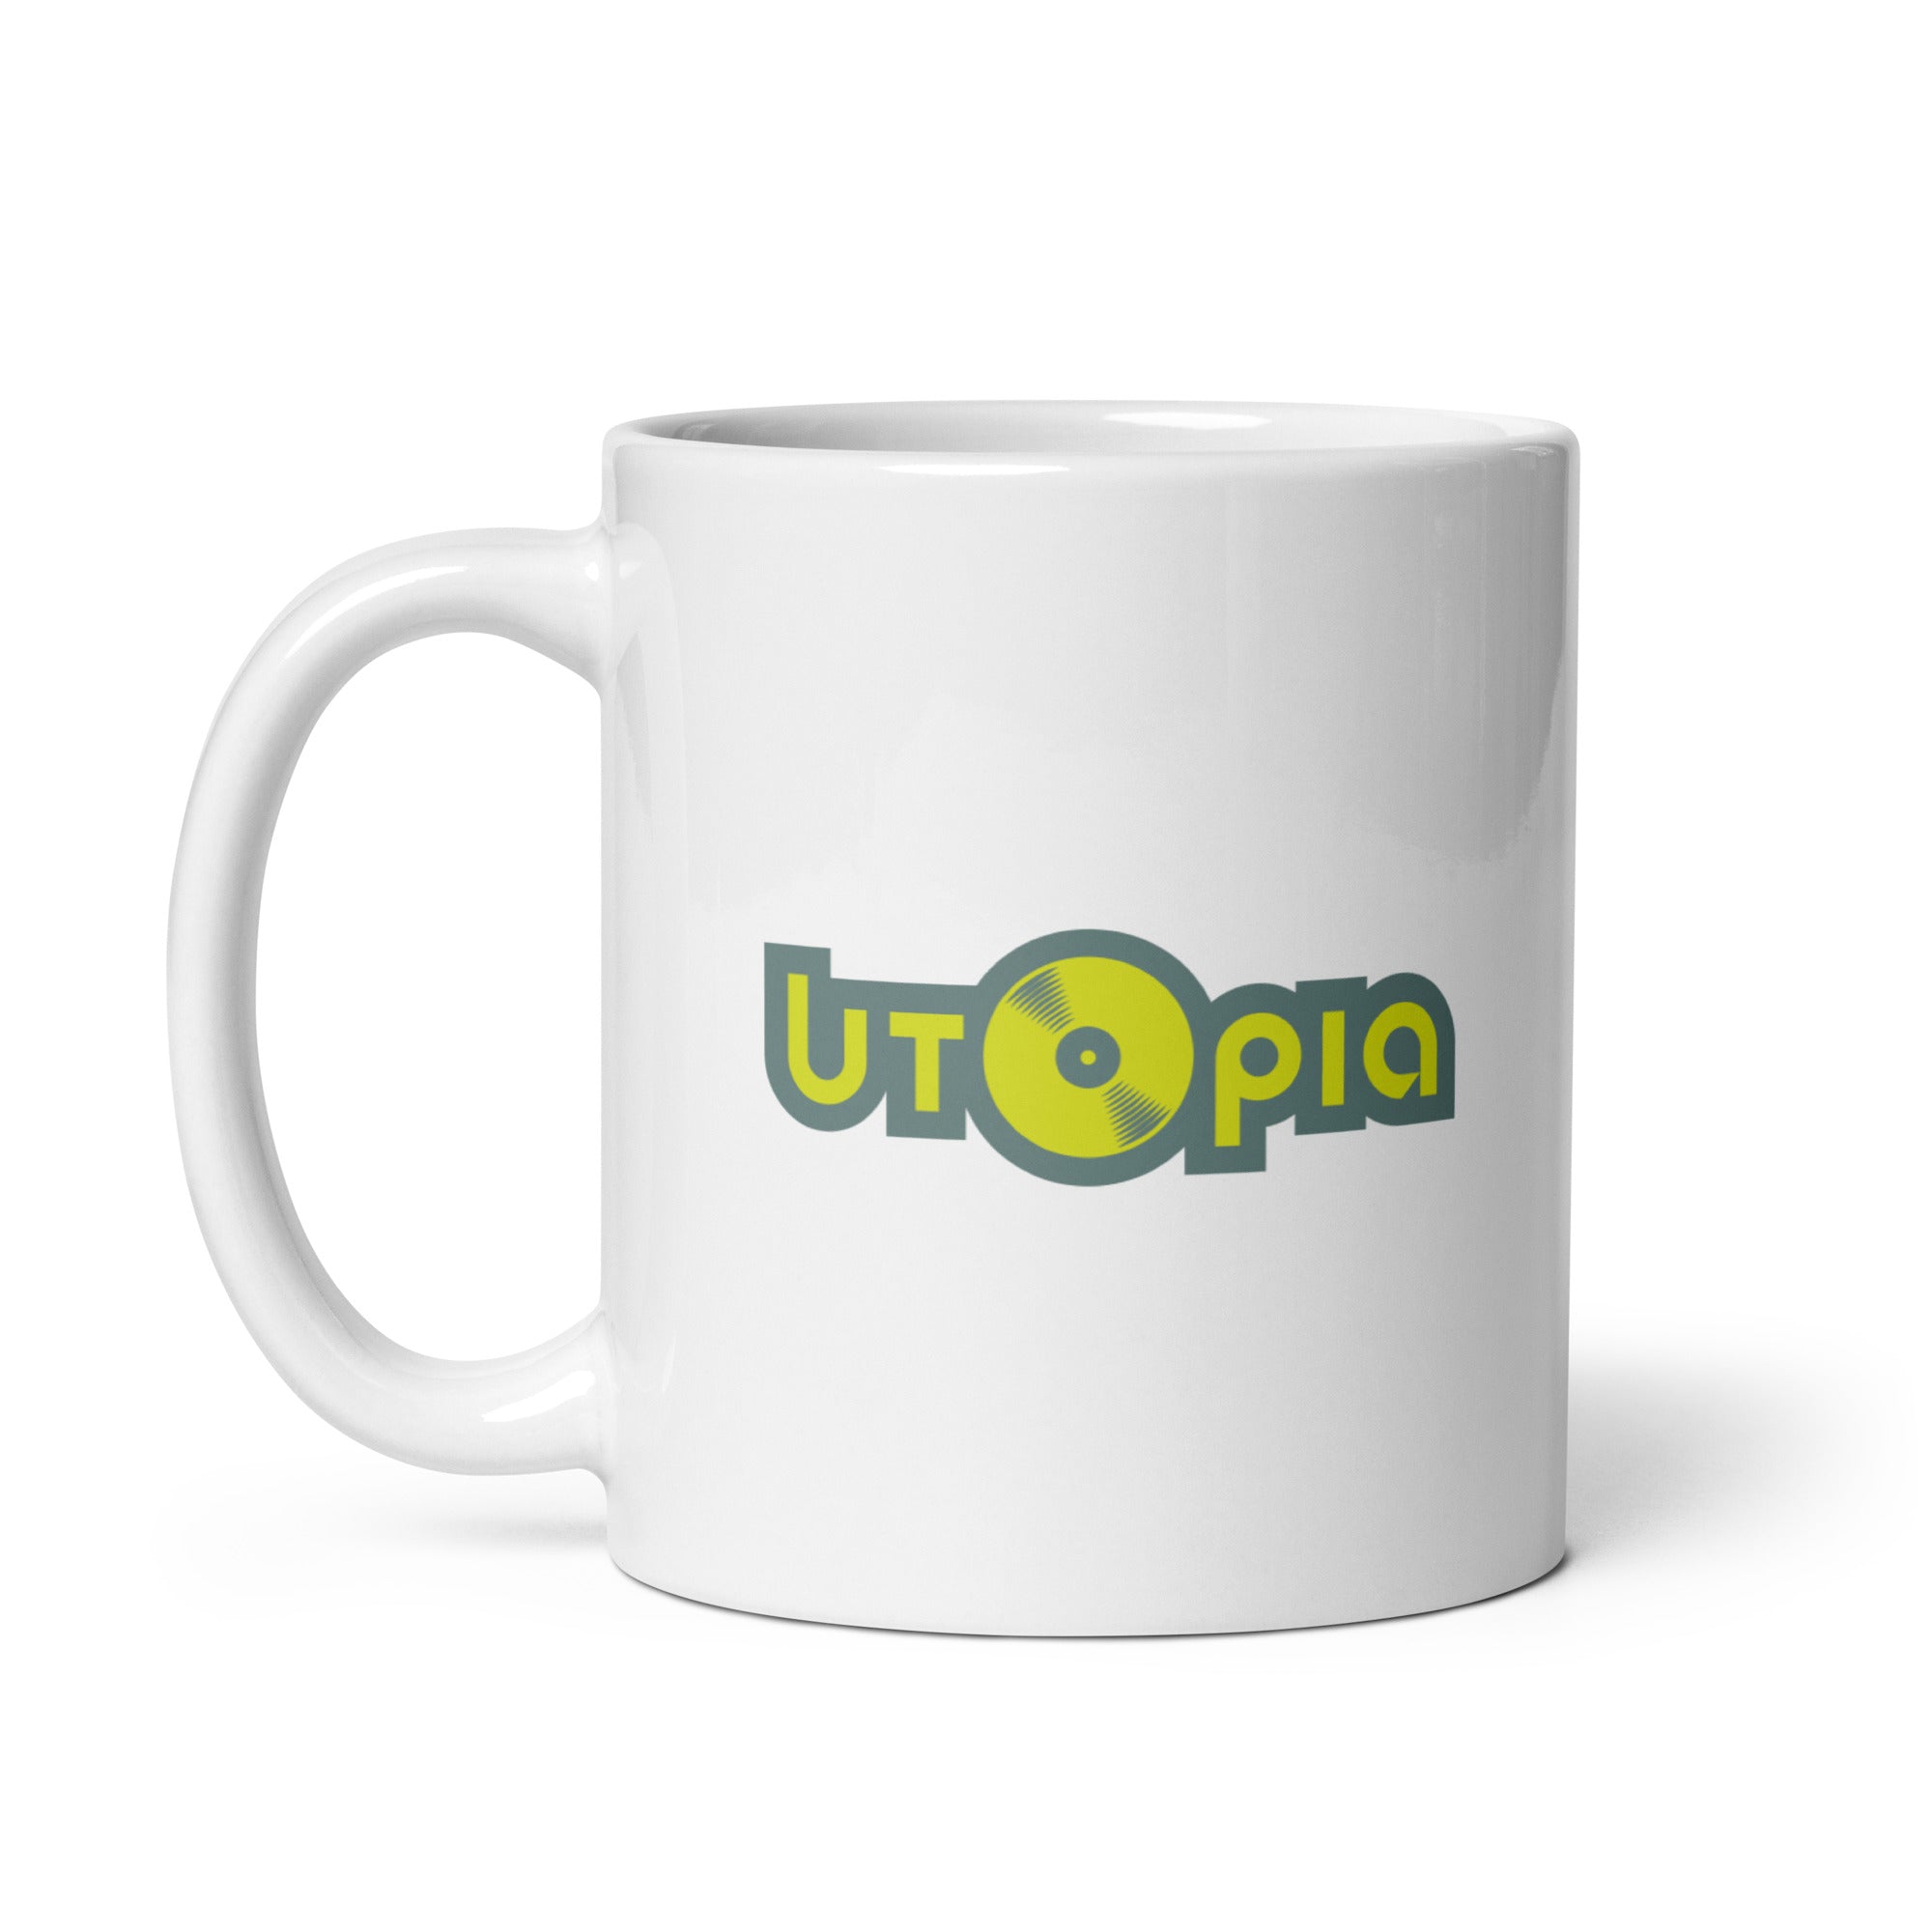 Utopia: Mug